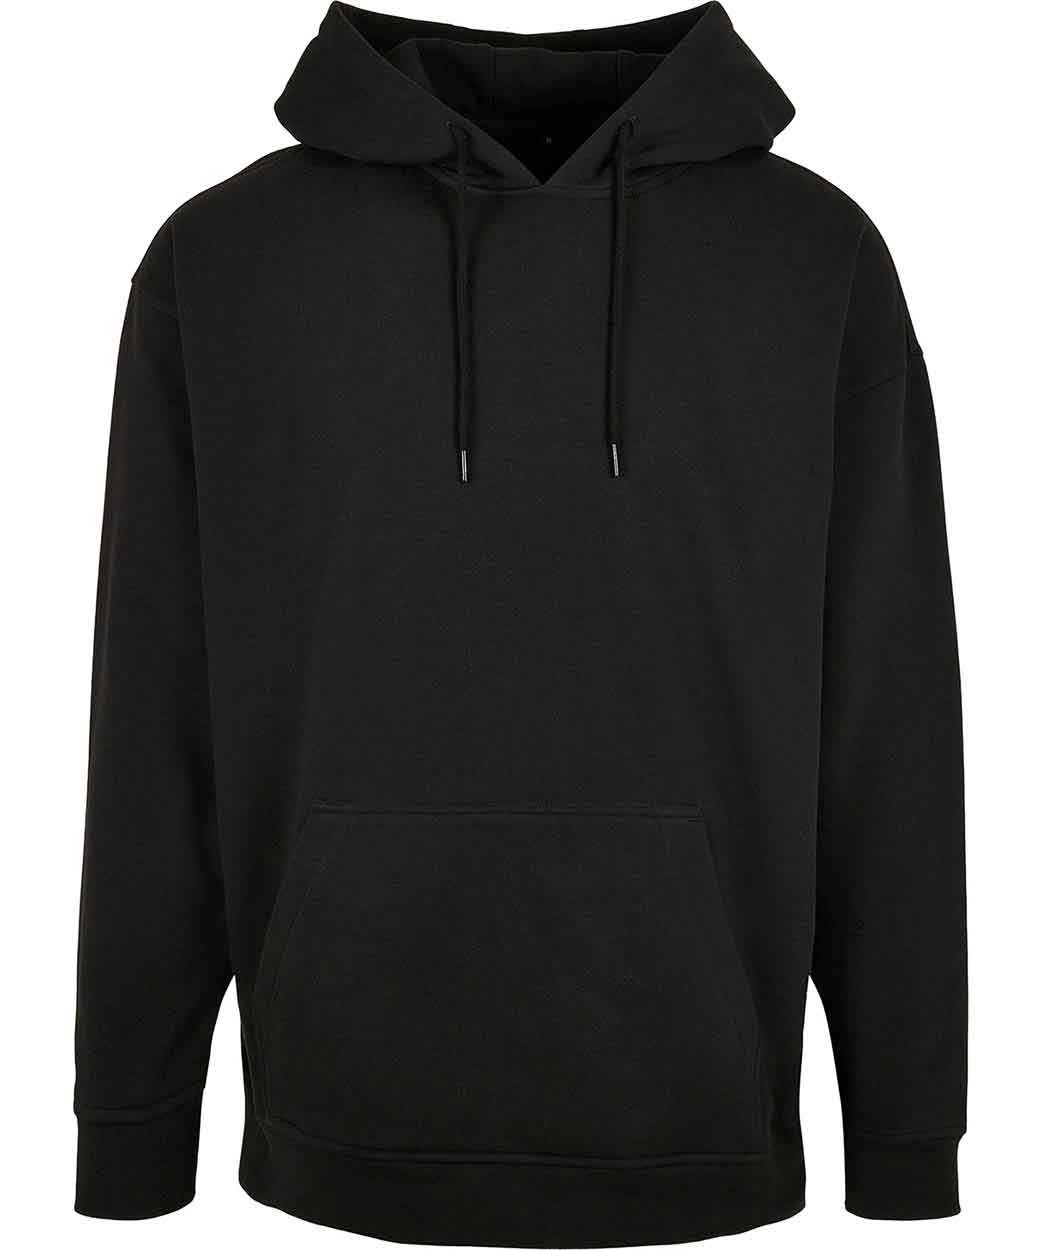 Build Your Brand Basic BB006 Basic oversize hoodie - Standard Hoodies -  Hoodies - Sweatshirts - Leisurewear - Best Workwear